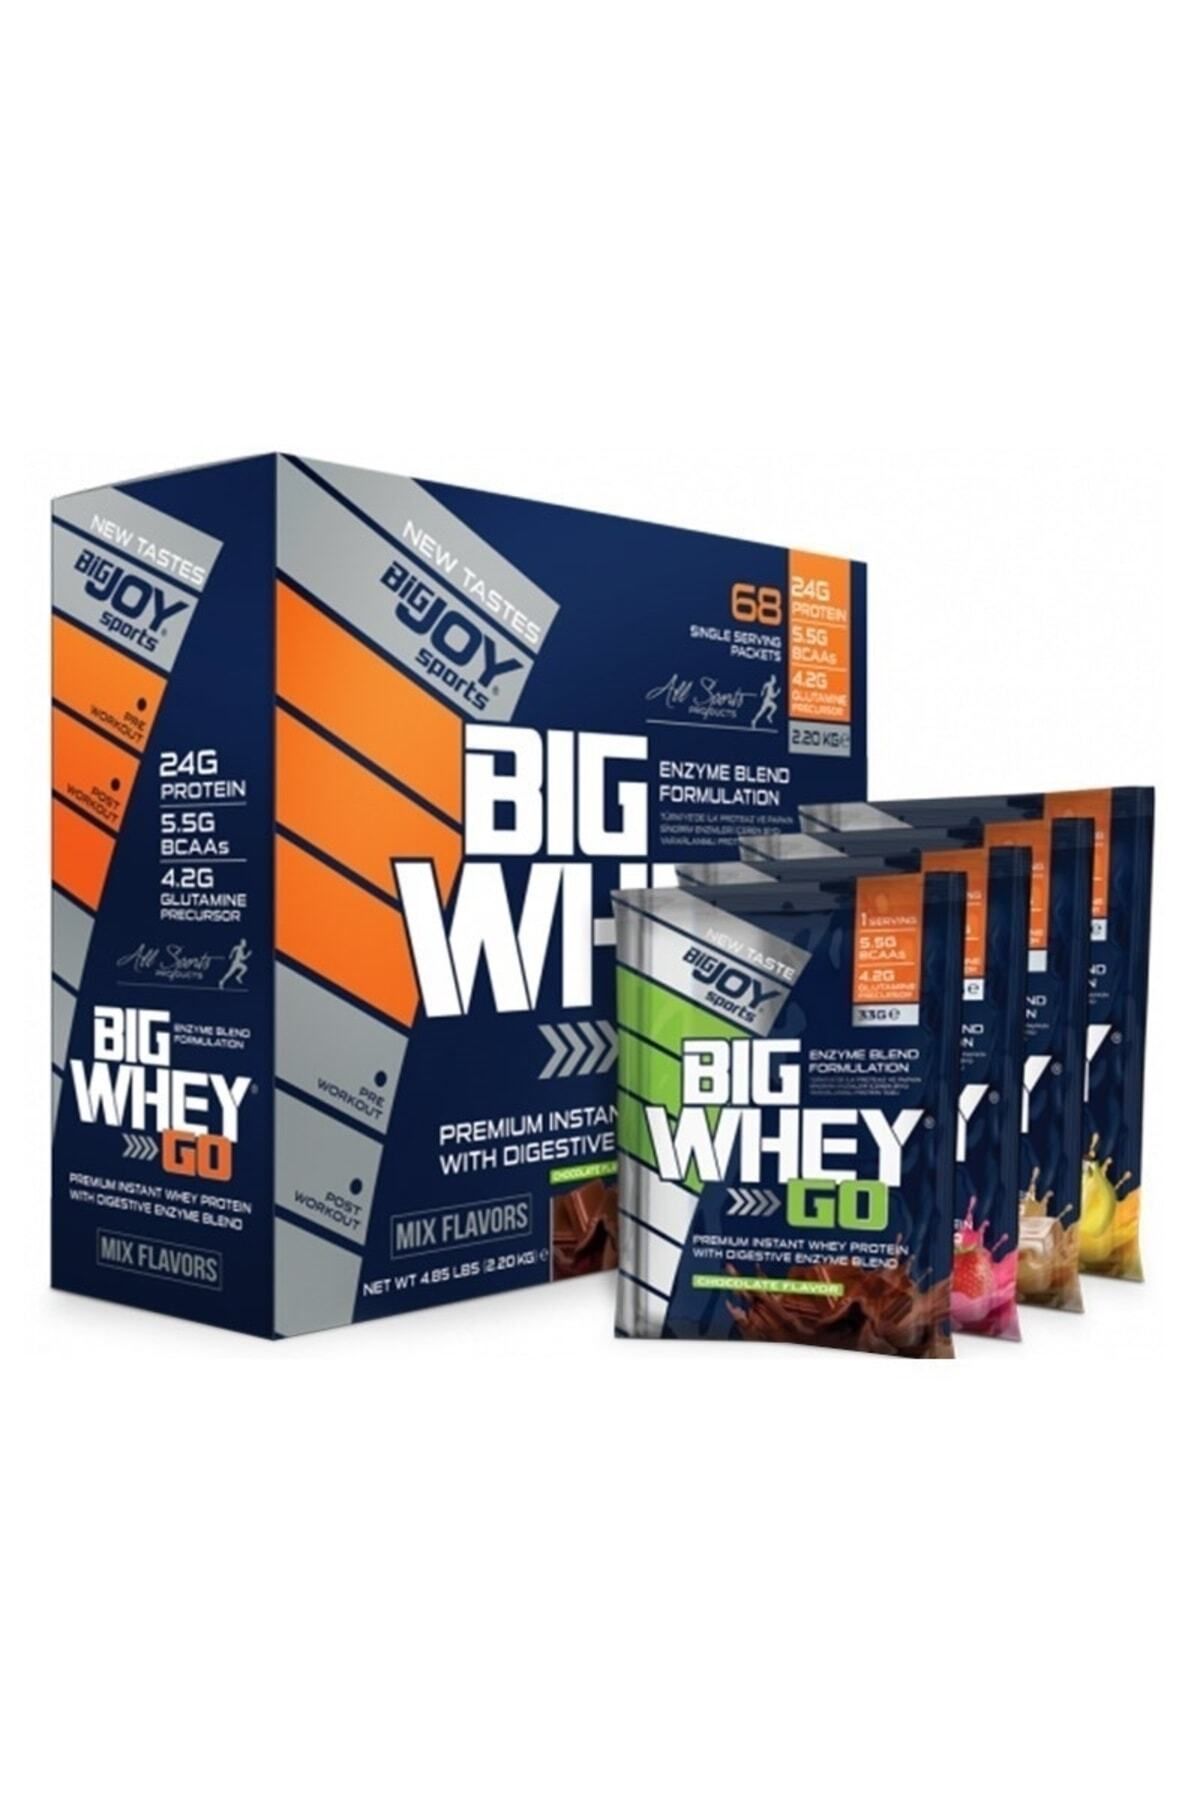 MEDITERIAN 2 Kg+ Bigjoy Bigwhey Go Whey Protein 68 Şase 2200 gr Mix Flavors 4 Farklı Aroma Haki Tek Ebat